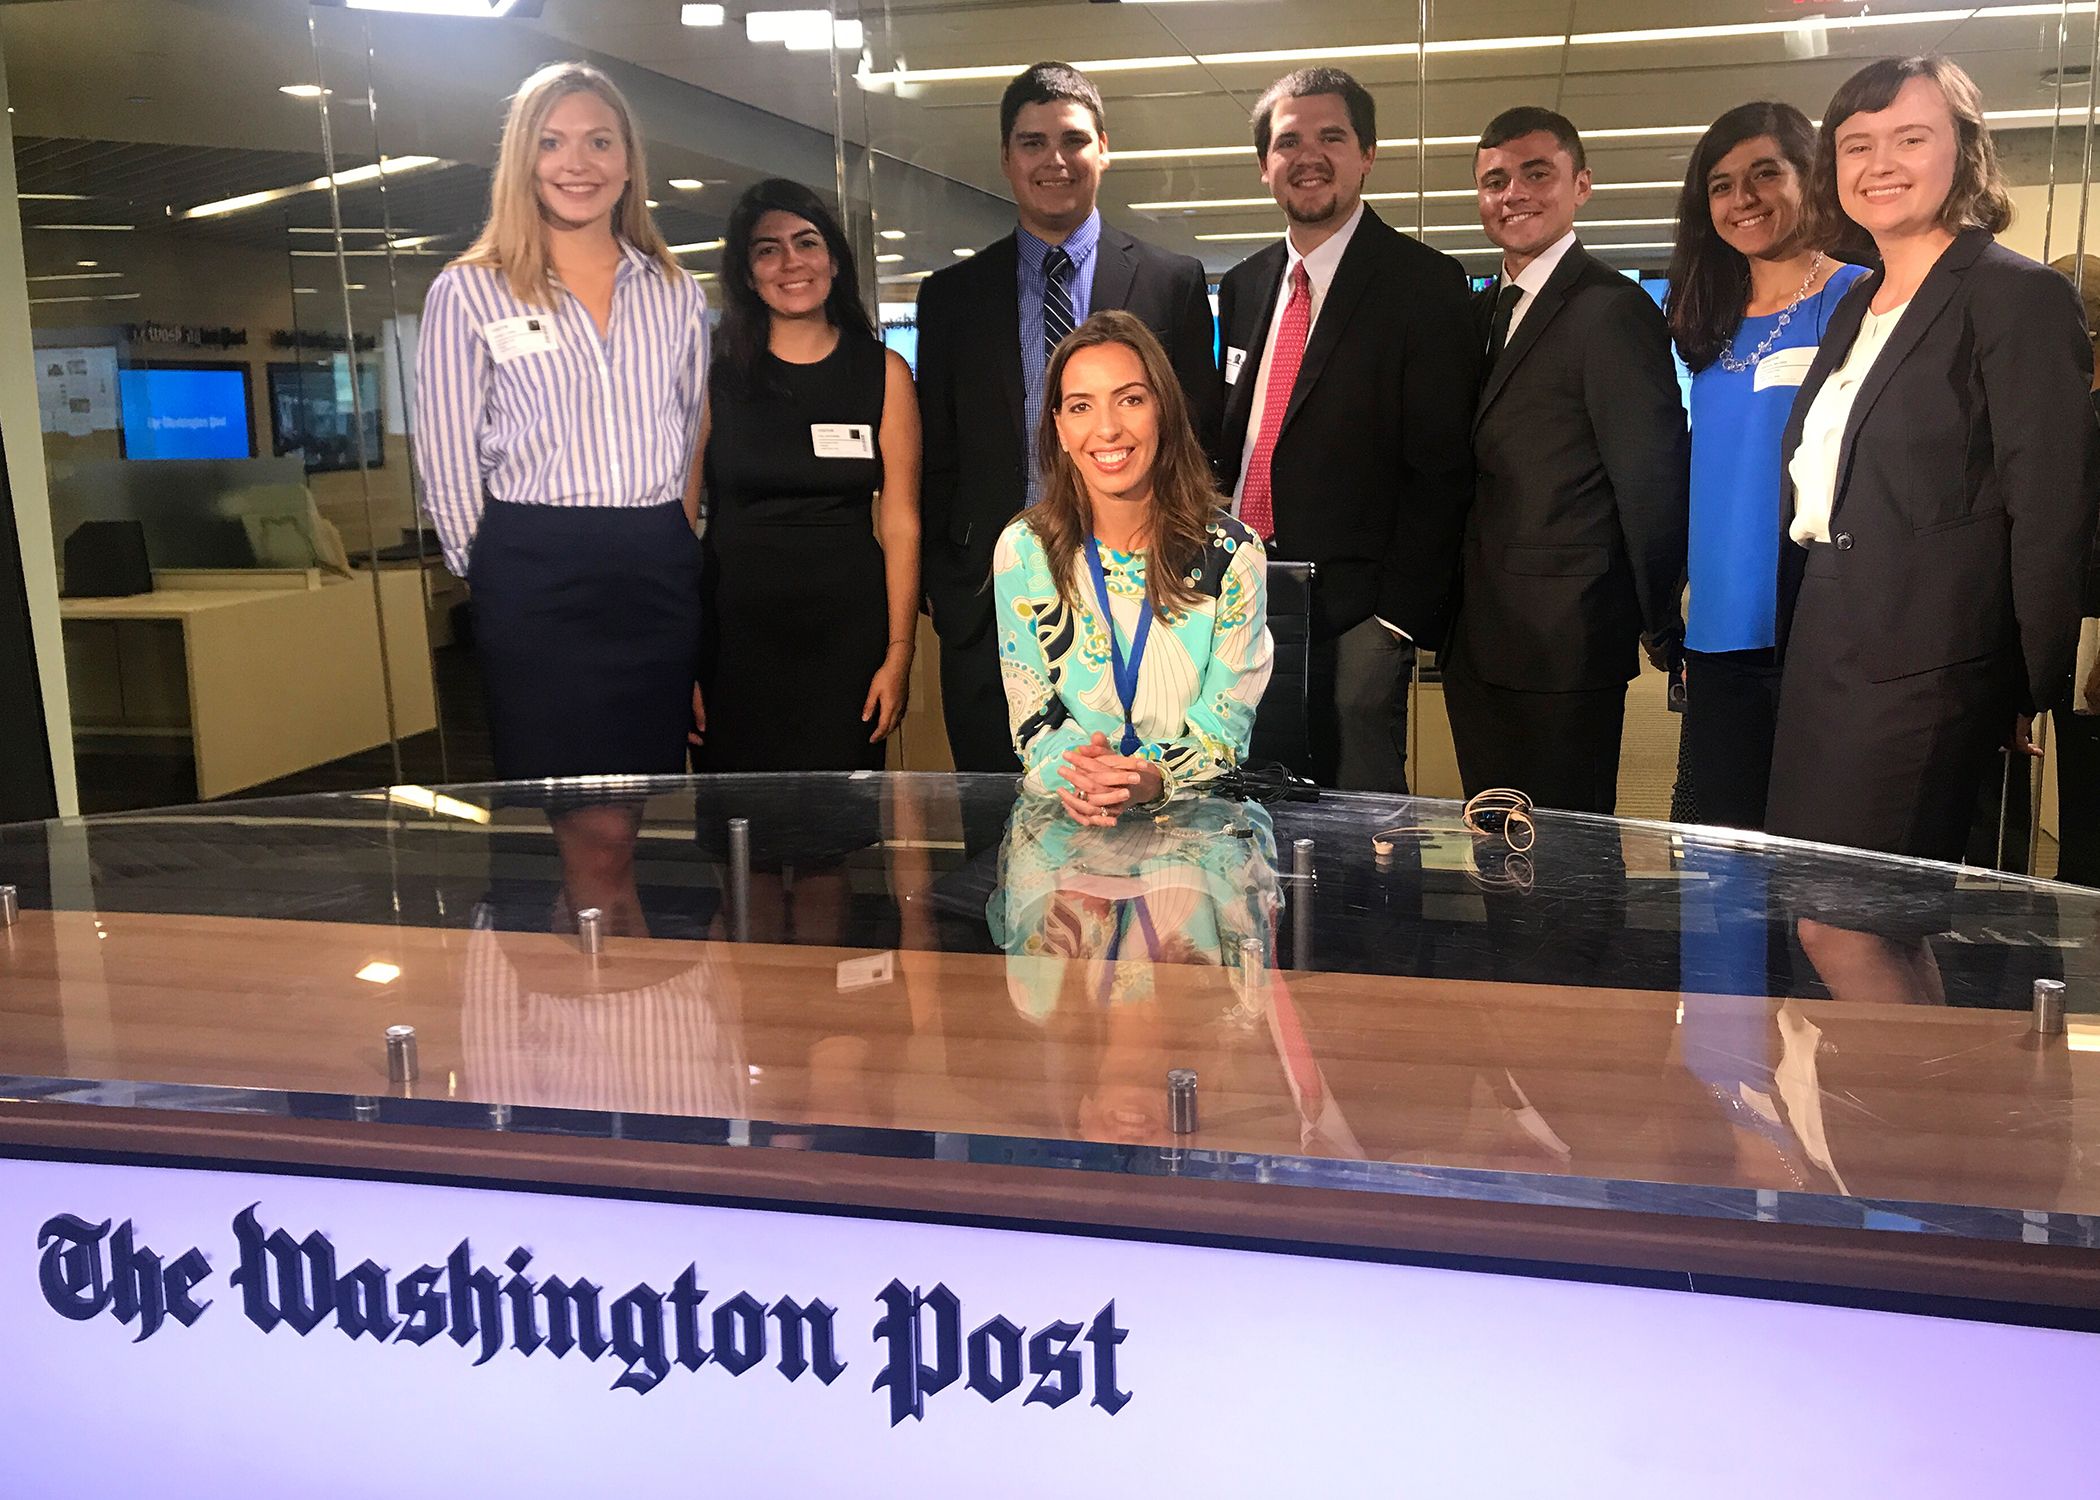 Students meet with TFAS alumna at the Washington Post